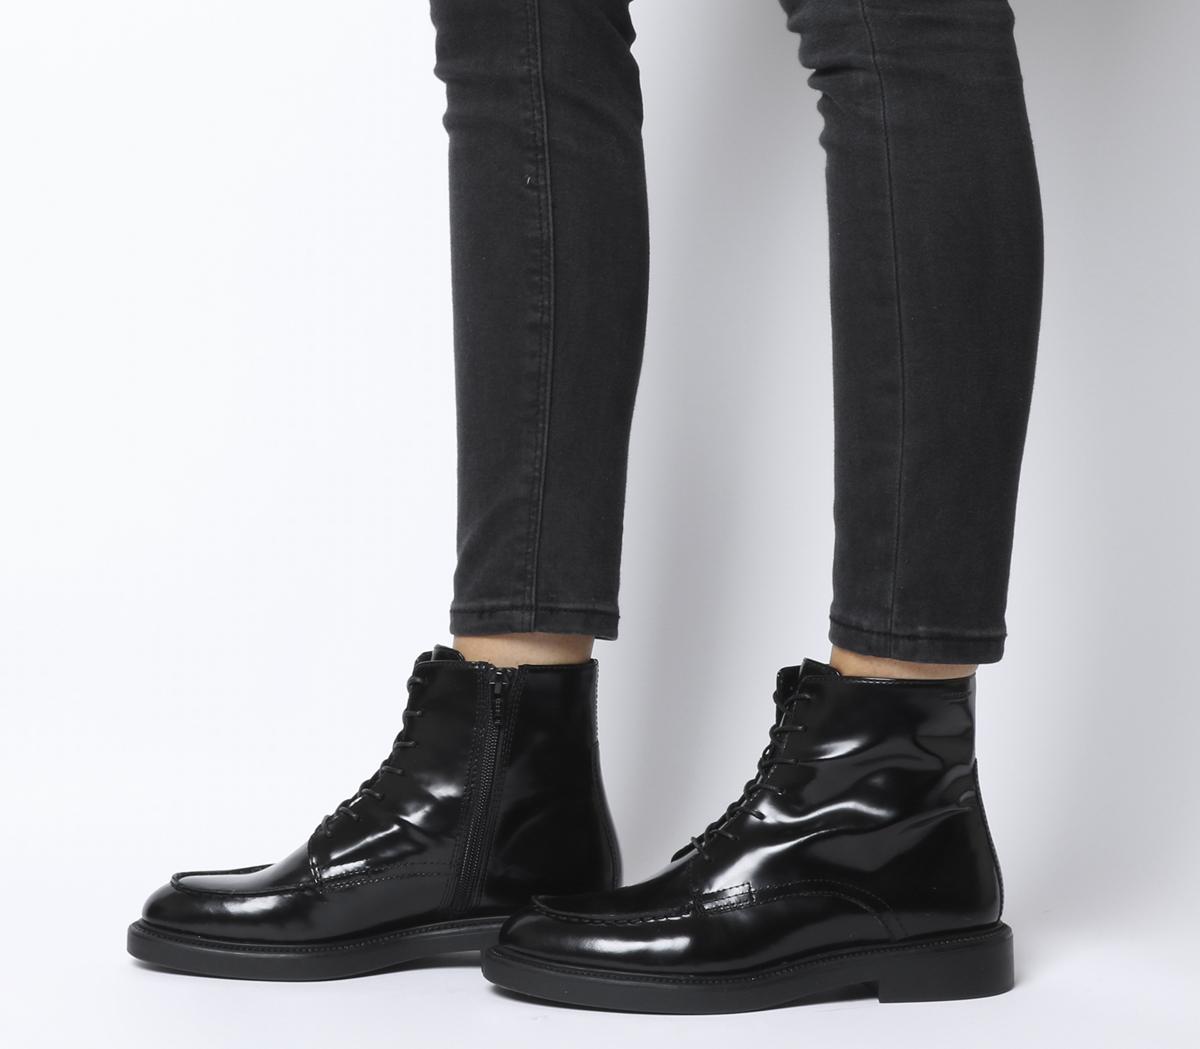 black polish boots